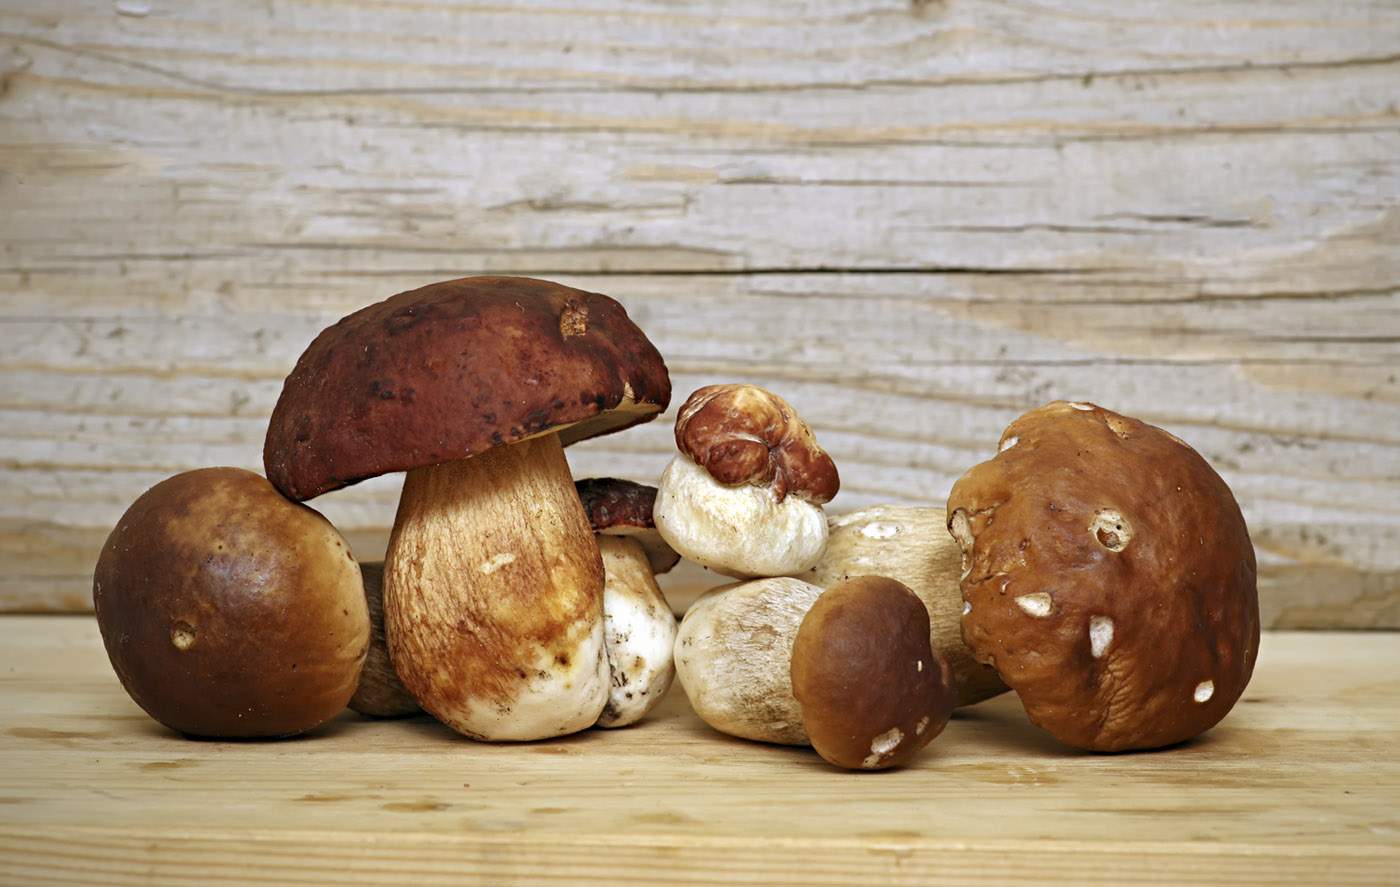 Mushroom Boletus over Wooden Background. Autumn Cep Mushrooms picking